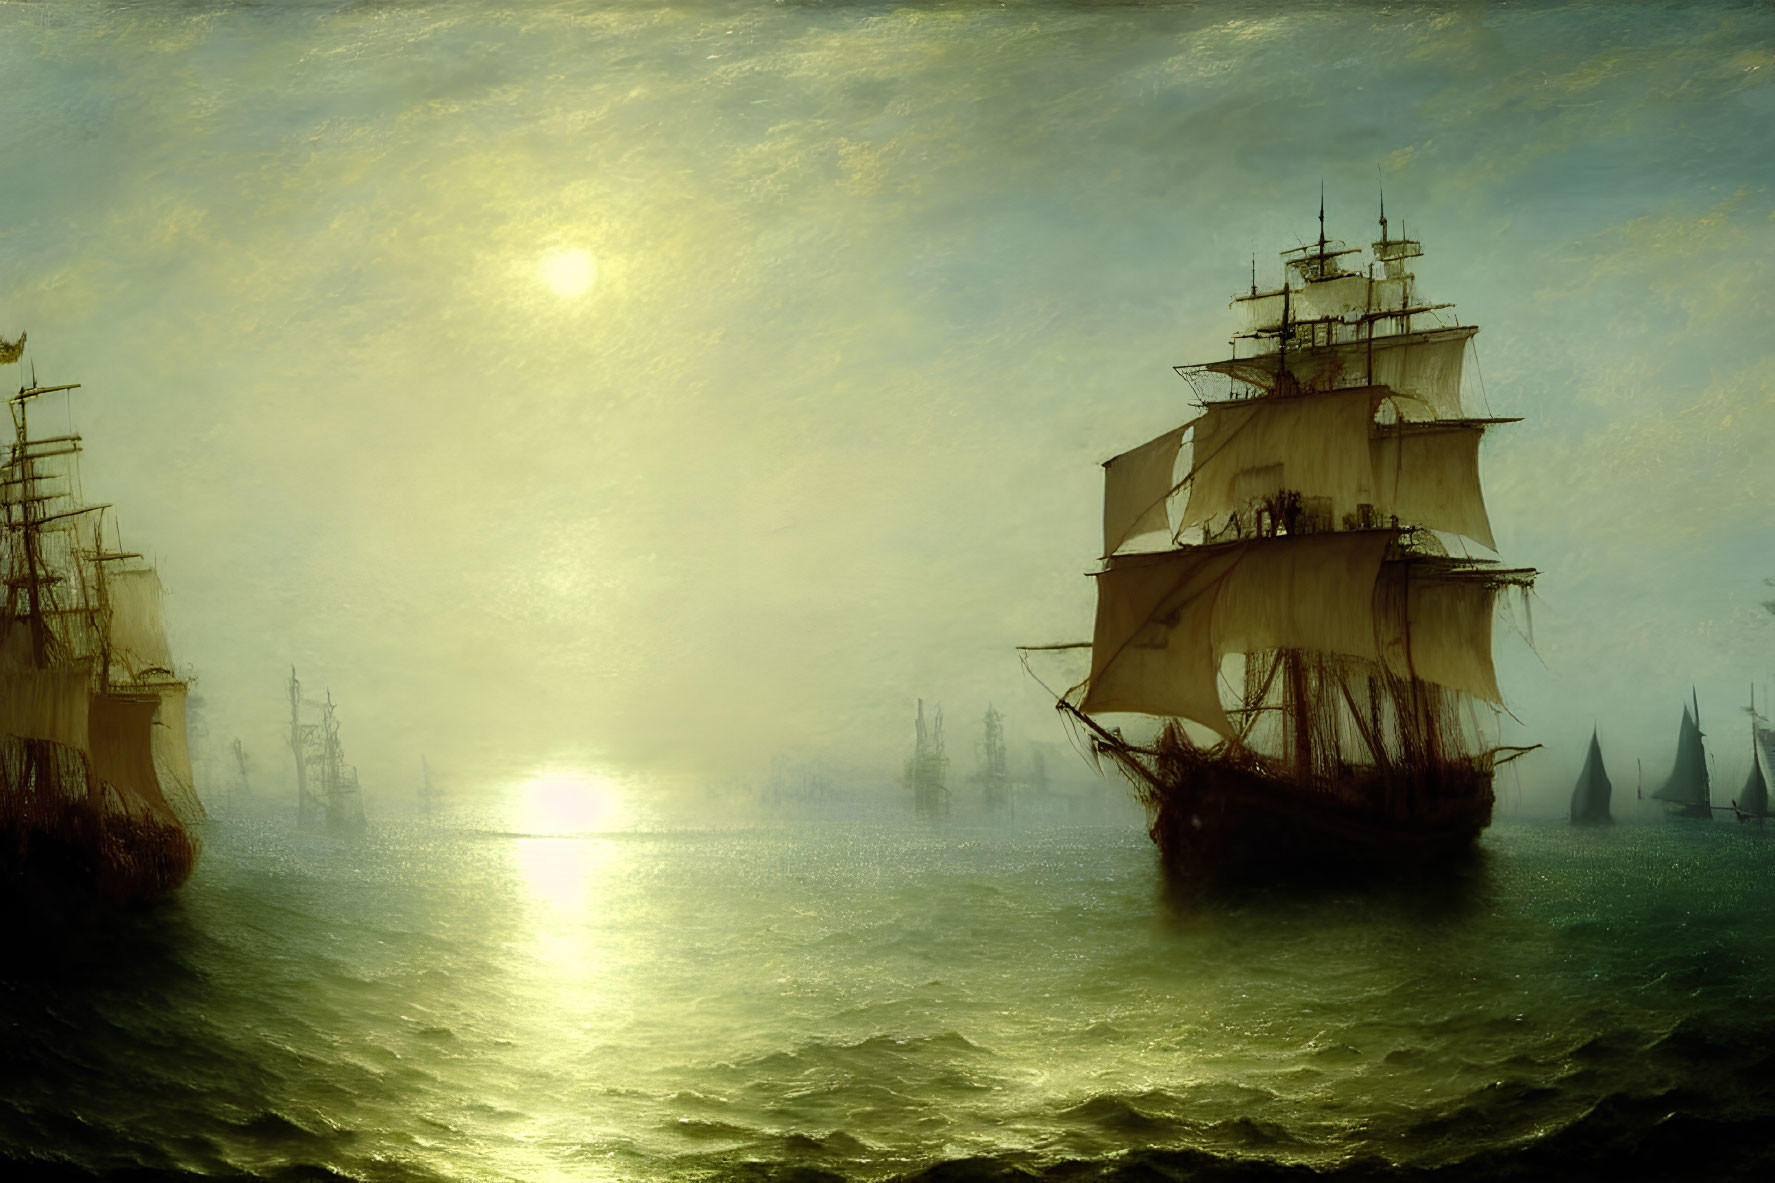 Sailing ships on misty sea at sunset or sunrise